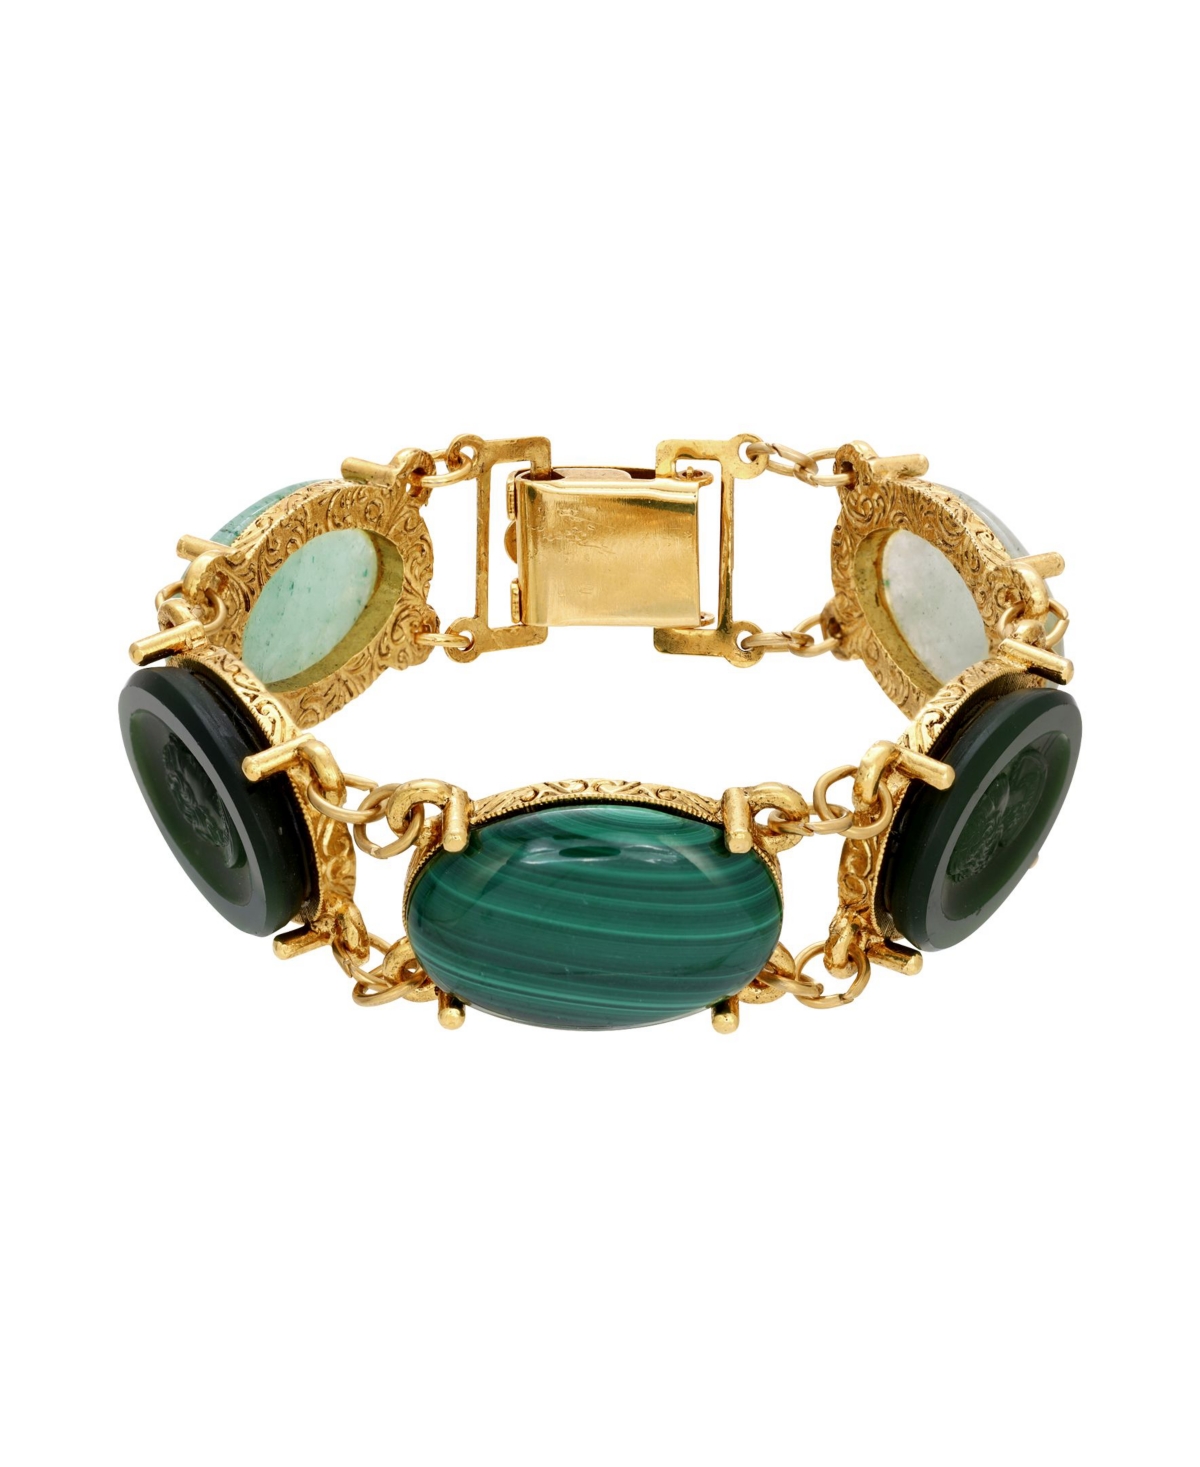 Vintage Style Jewelry, Retro Jewelry 2028 Gold-Tone Green Adventurine STone Link Bracelet - Green $59.50 AT vintagedancer.com